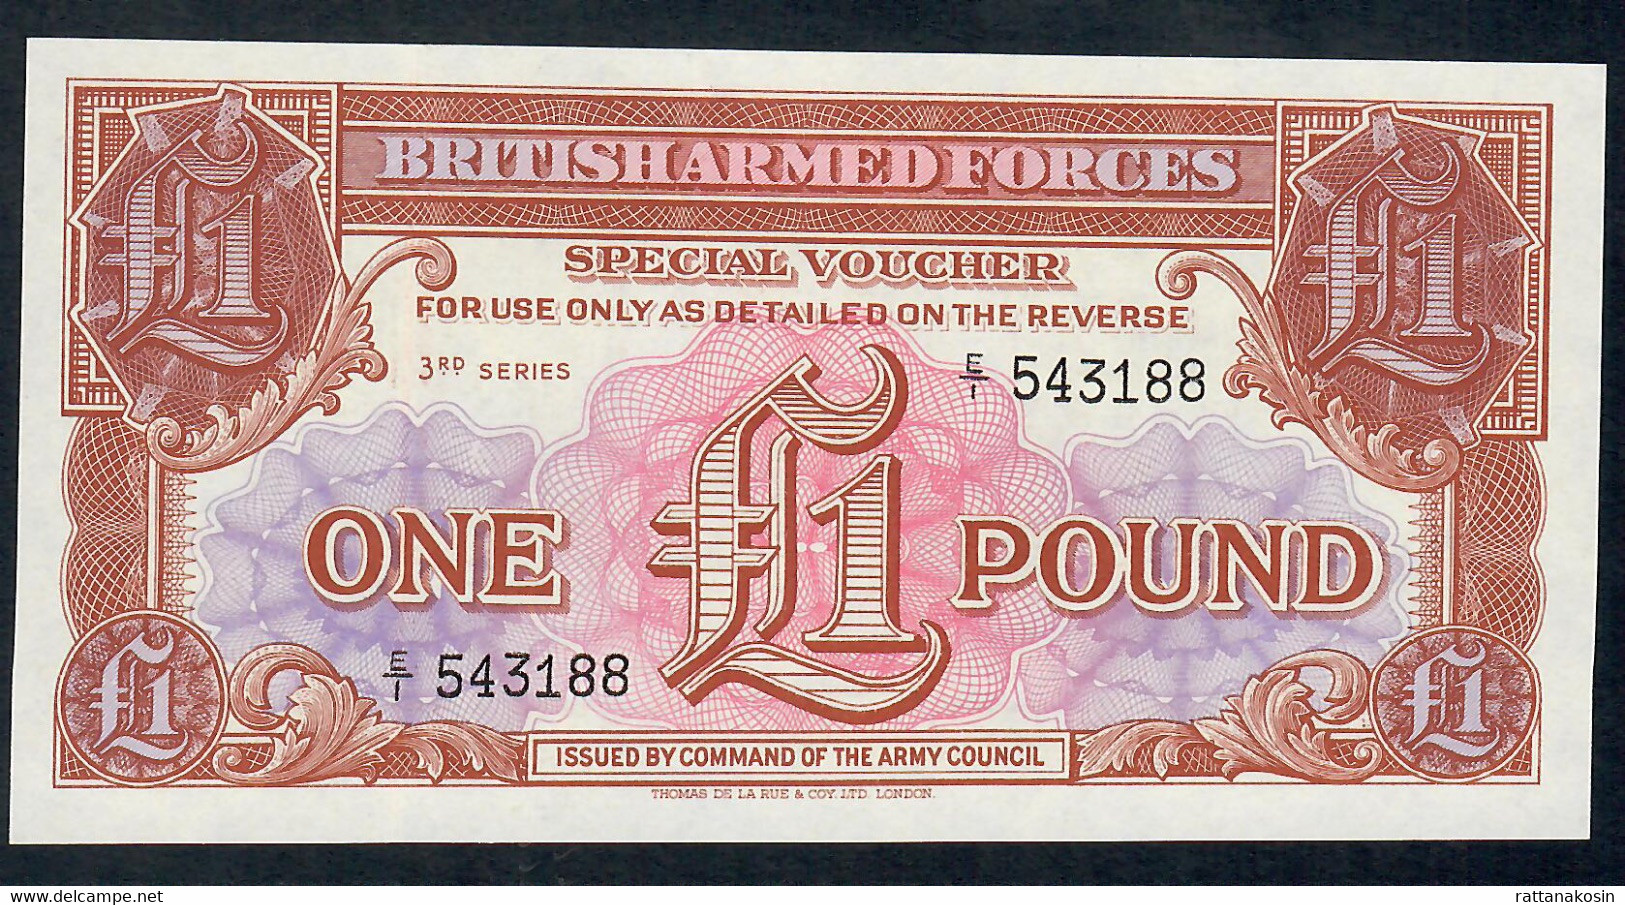 GREAT BRITAIN  PM29 1 POUND   1956    UNC. - British Armed Forces & Special Vouchers